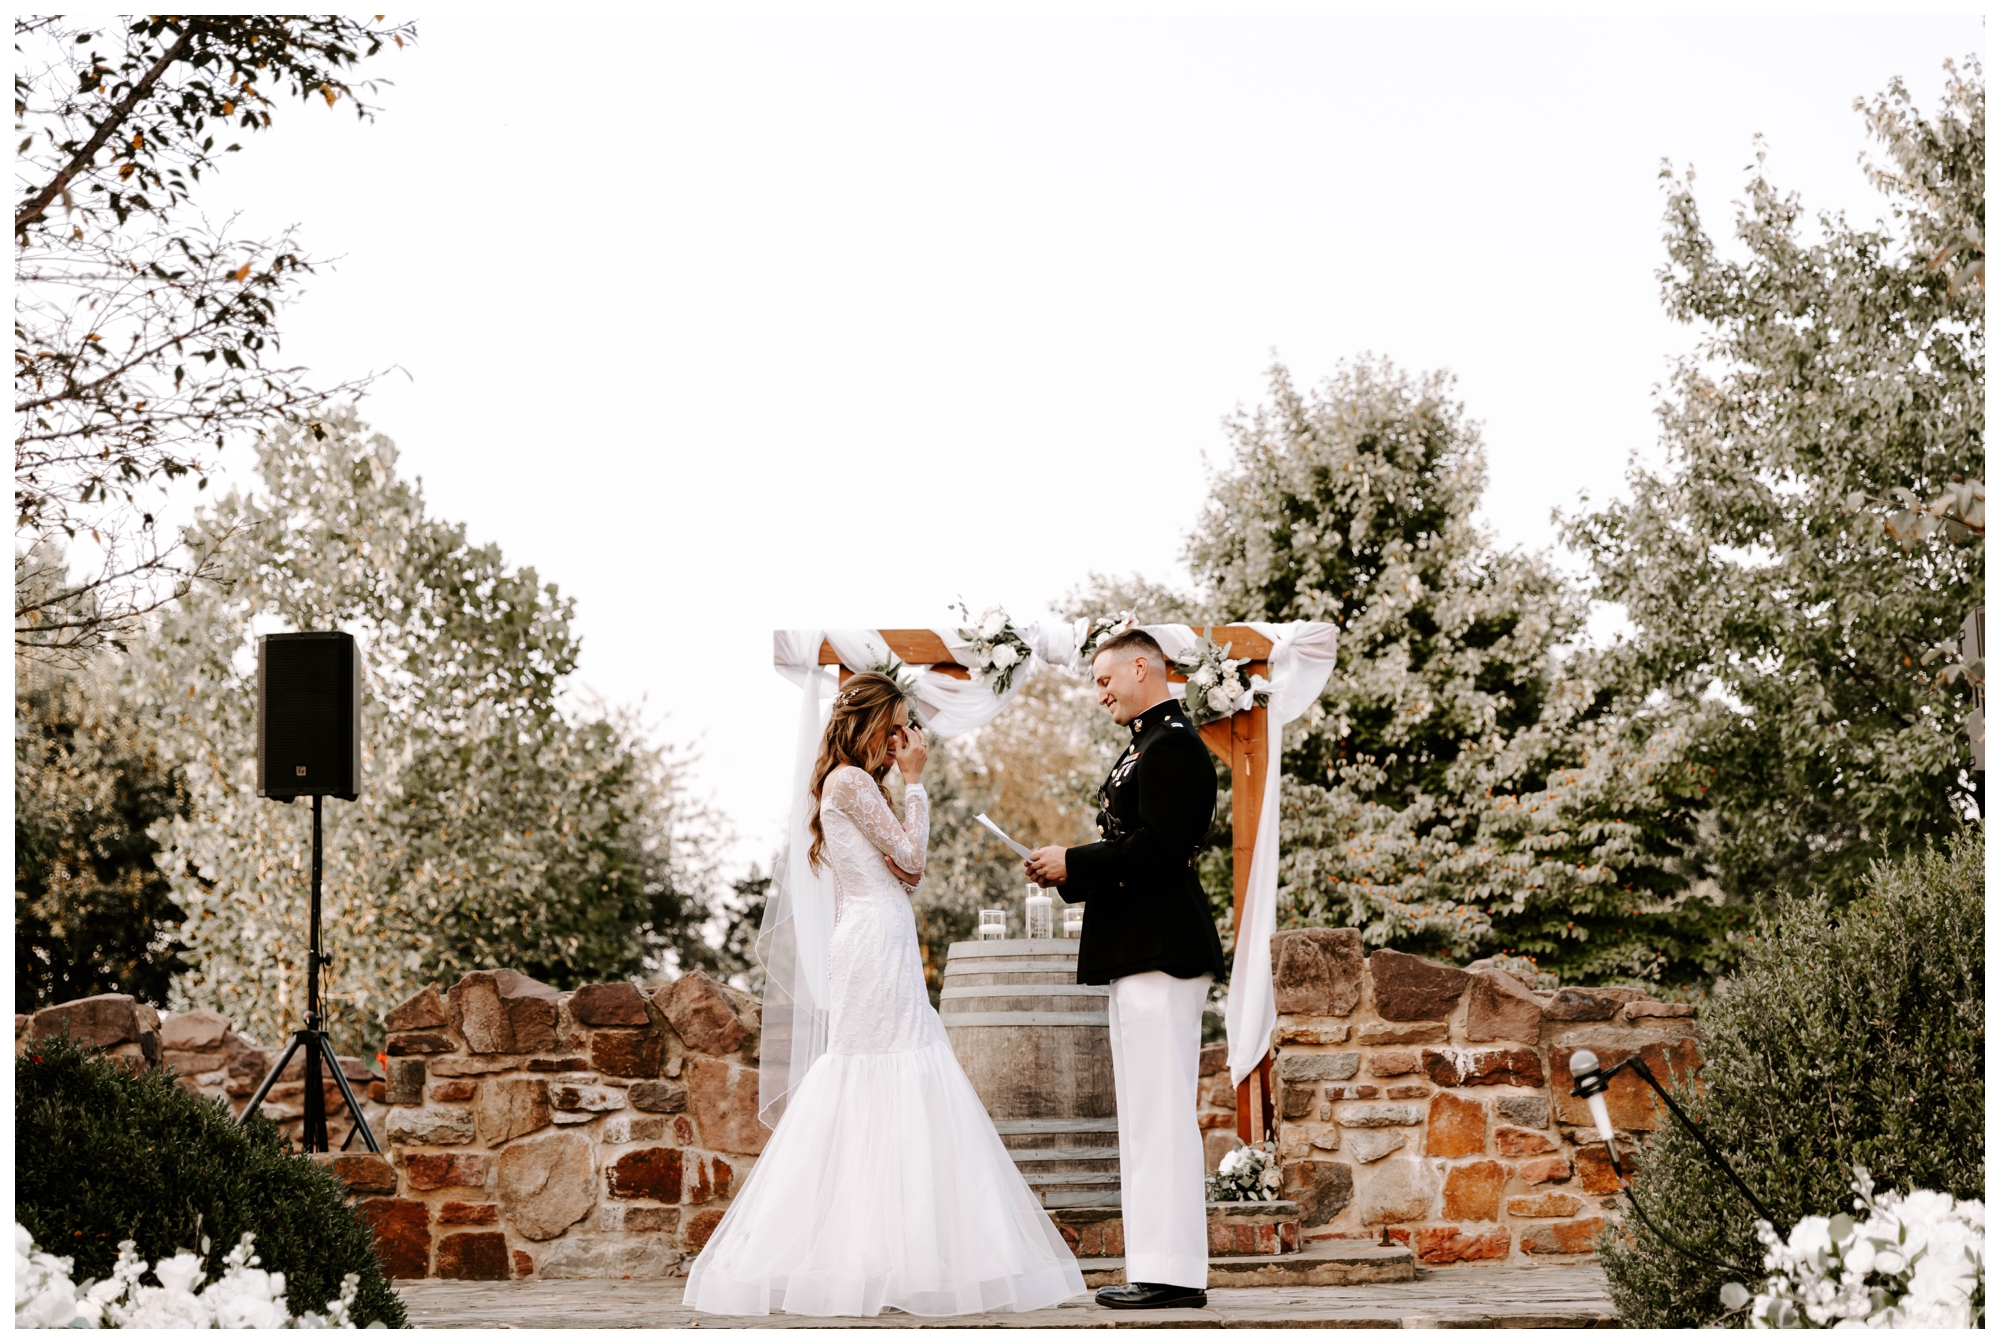 Mansion Ruins wedding ceremony at Winery at Bull Run, VA